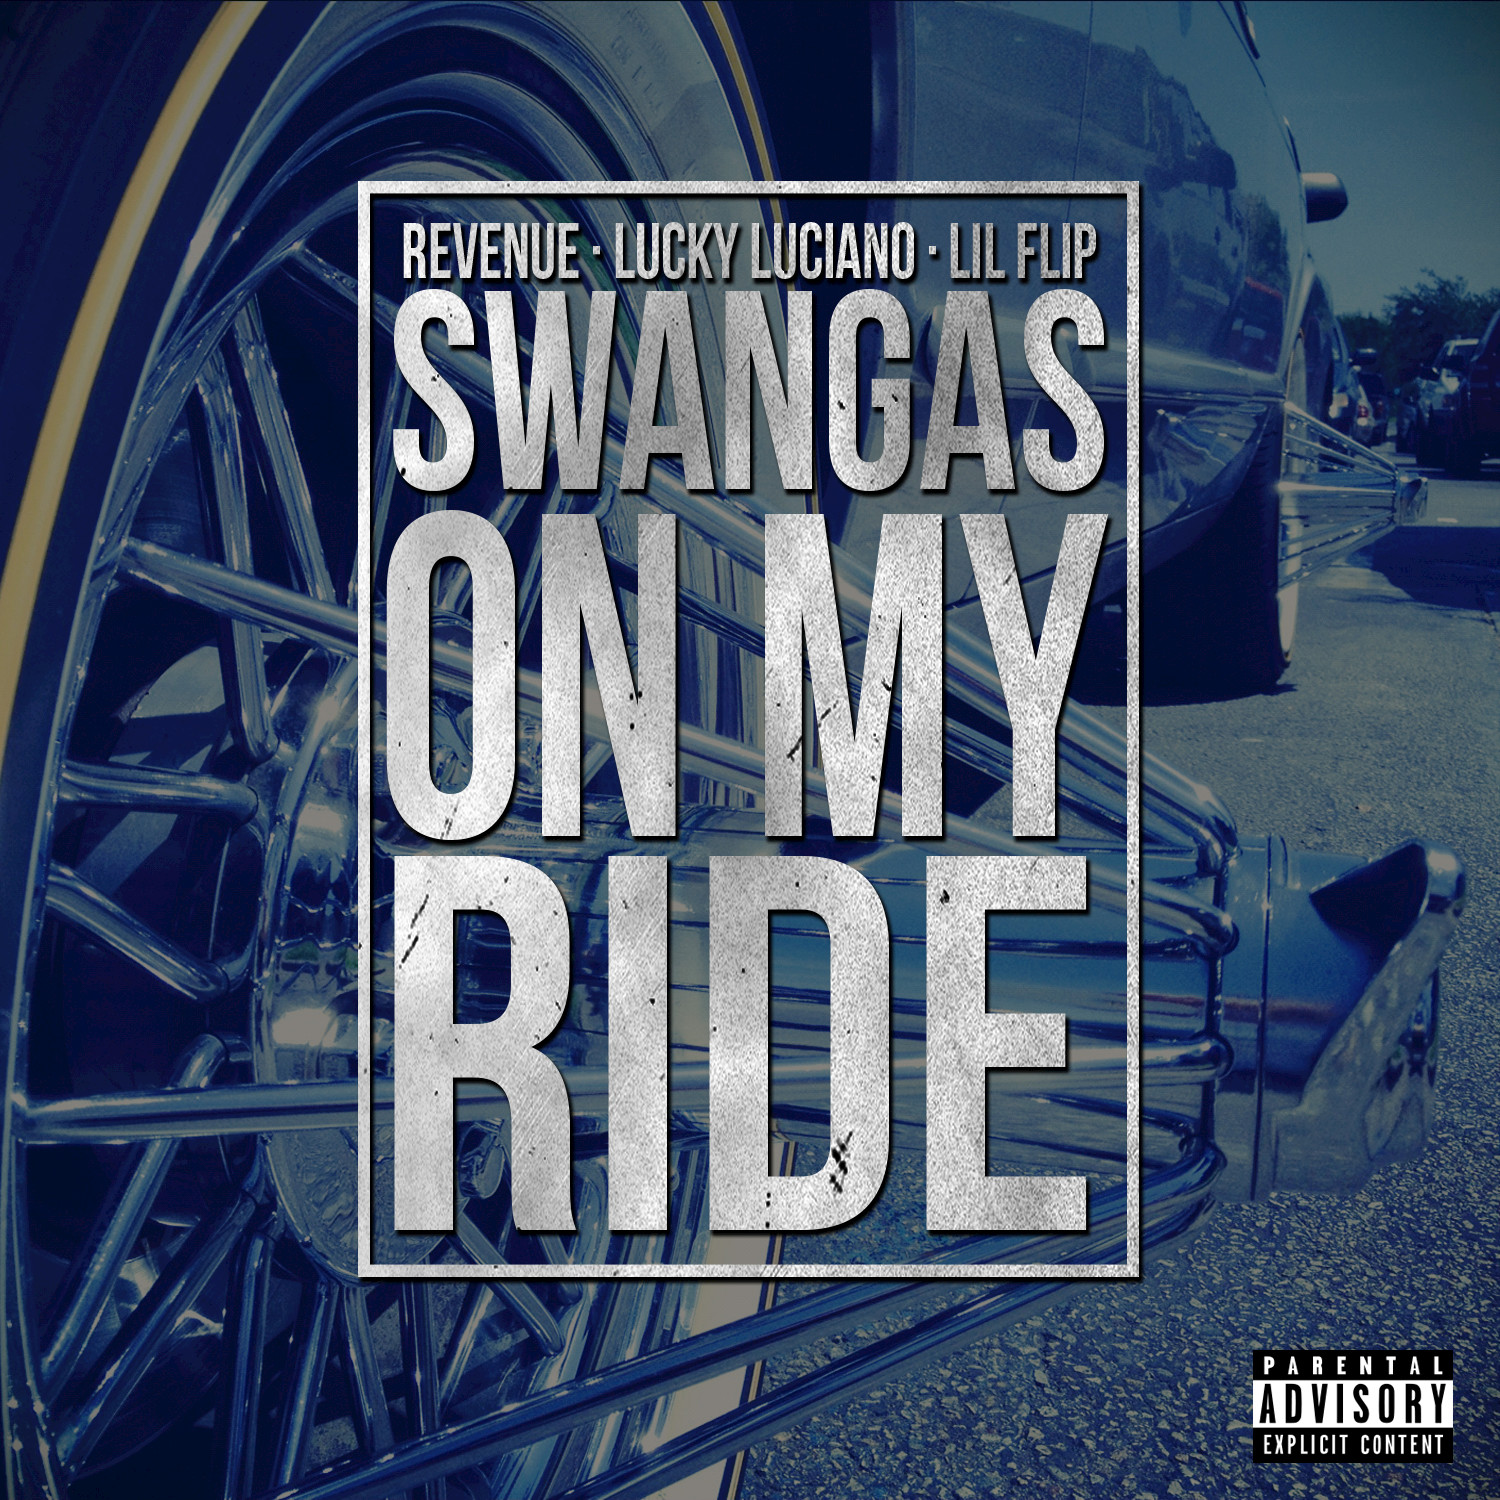 Swangas On My Ride